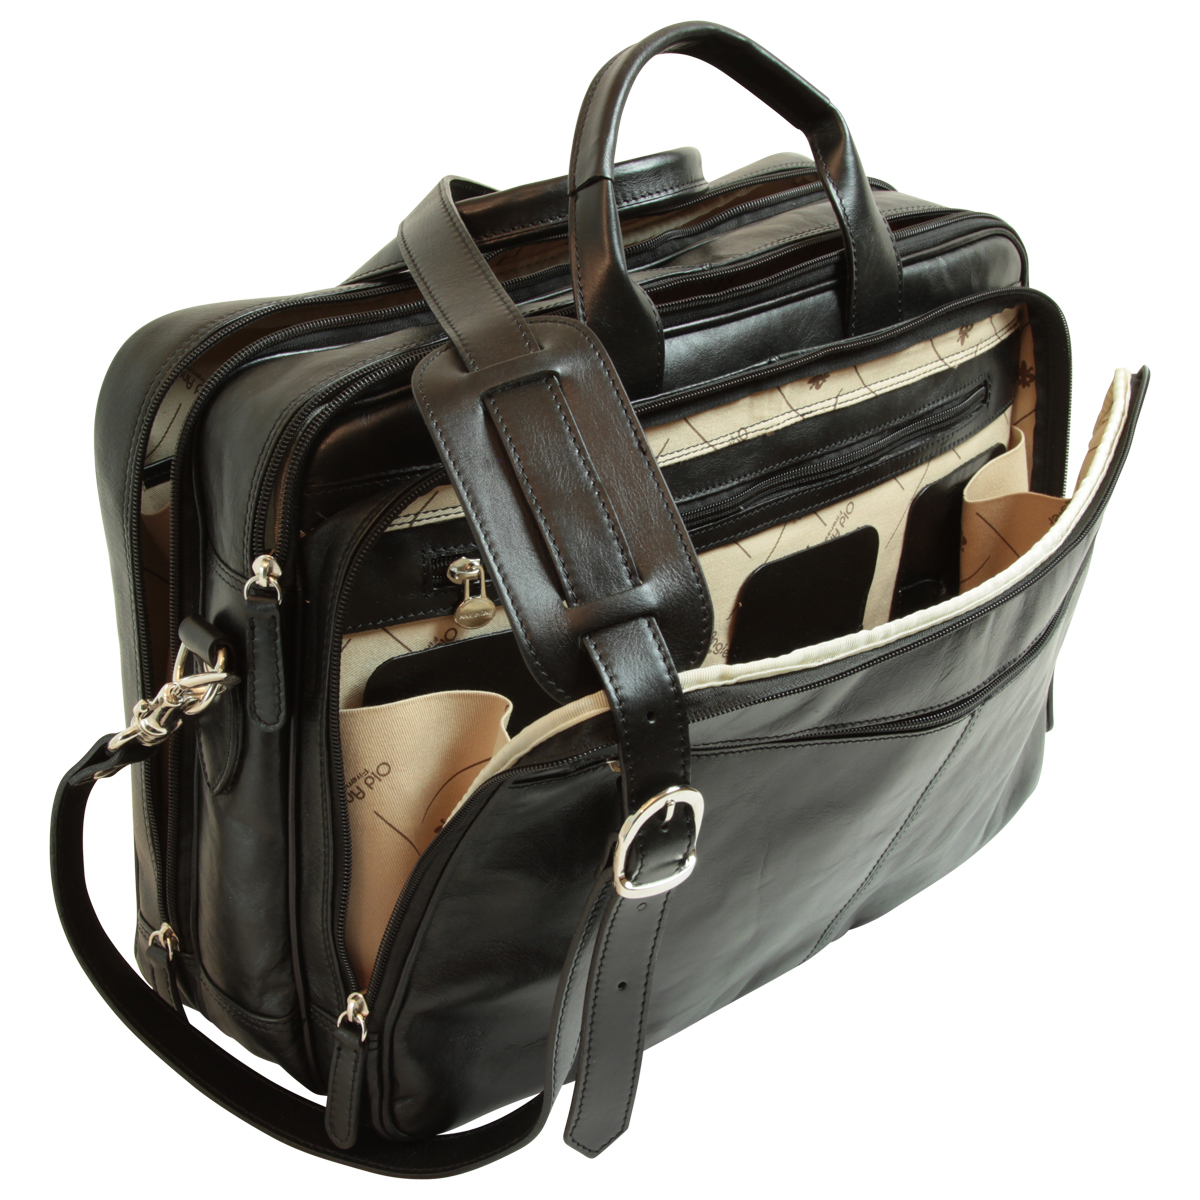 Italian Leather Briefcase - Black | 209589NE UK | Old Angler Firenze